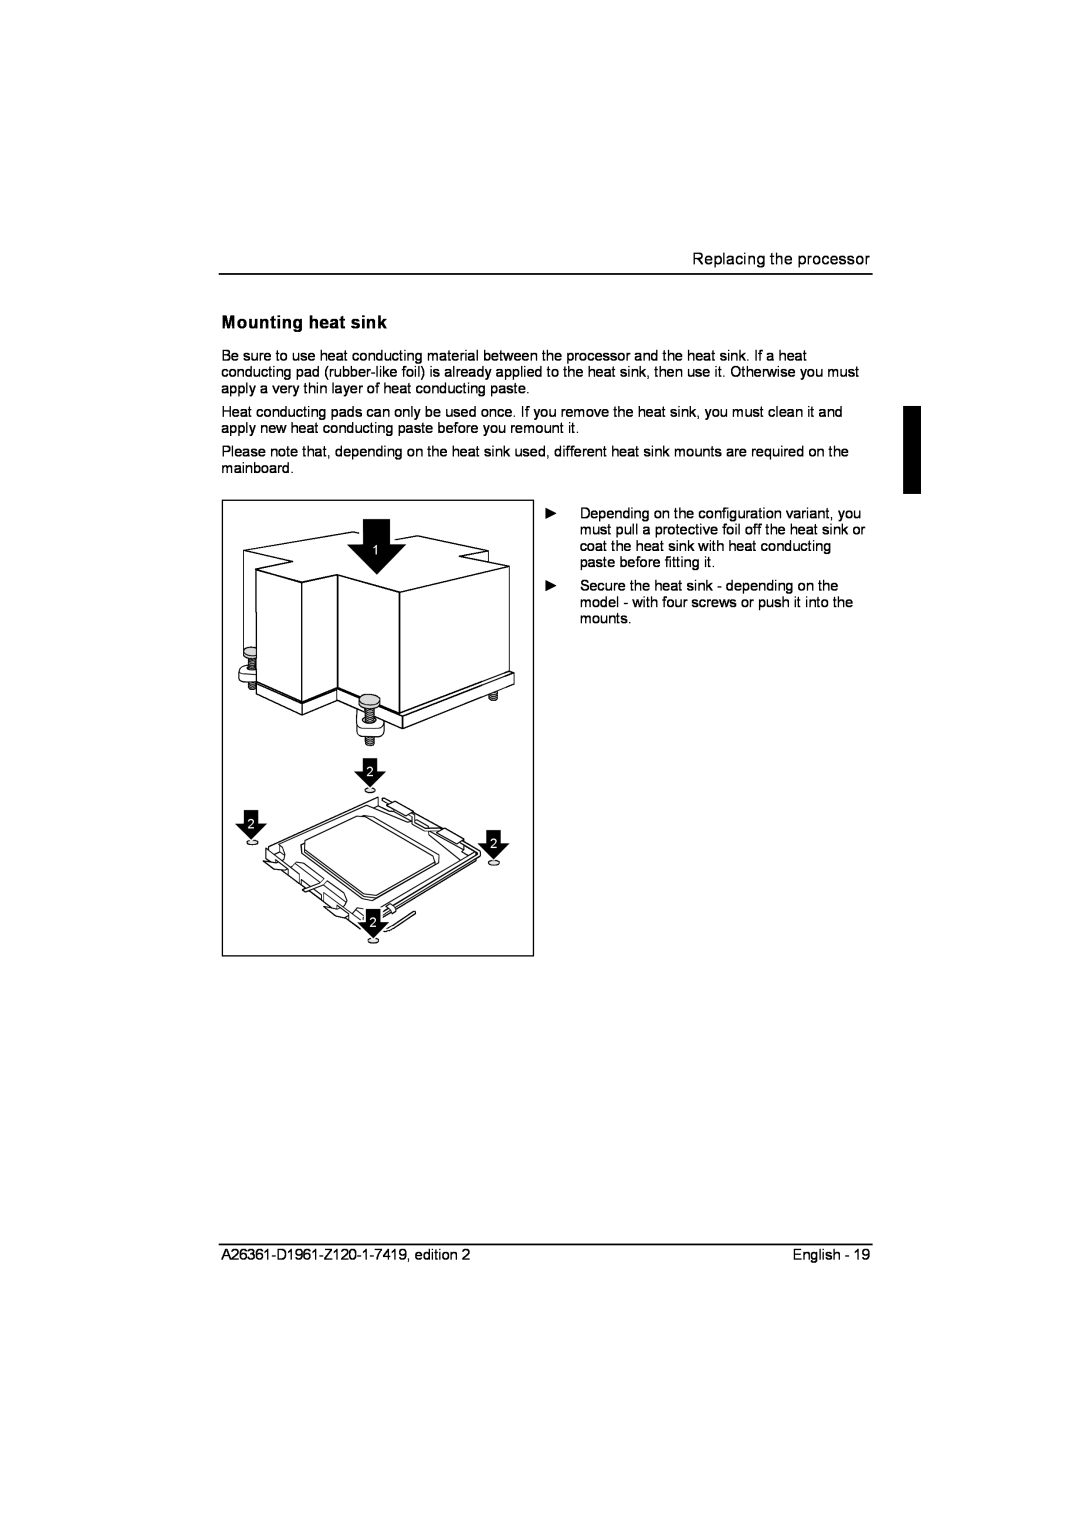 Fujitsu D1961 technical manual Mounting heat sink, Replacing the processor 